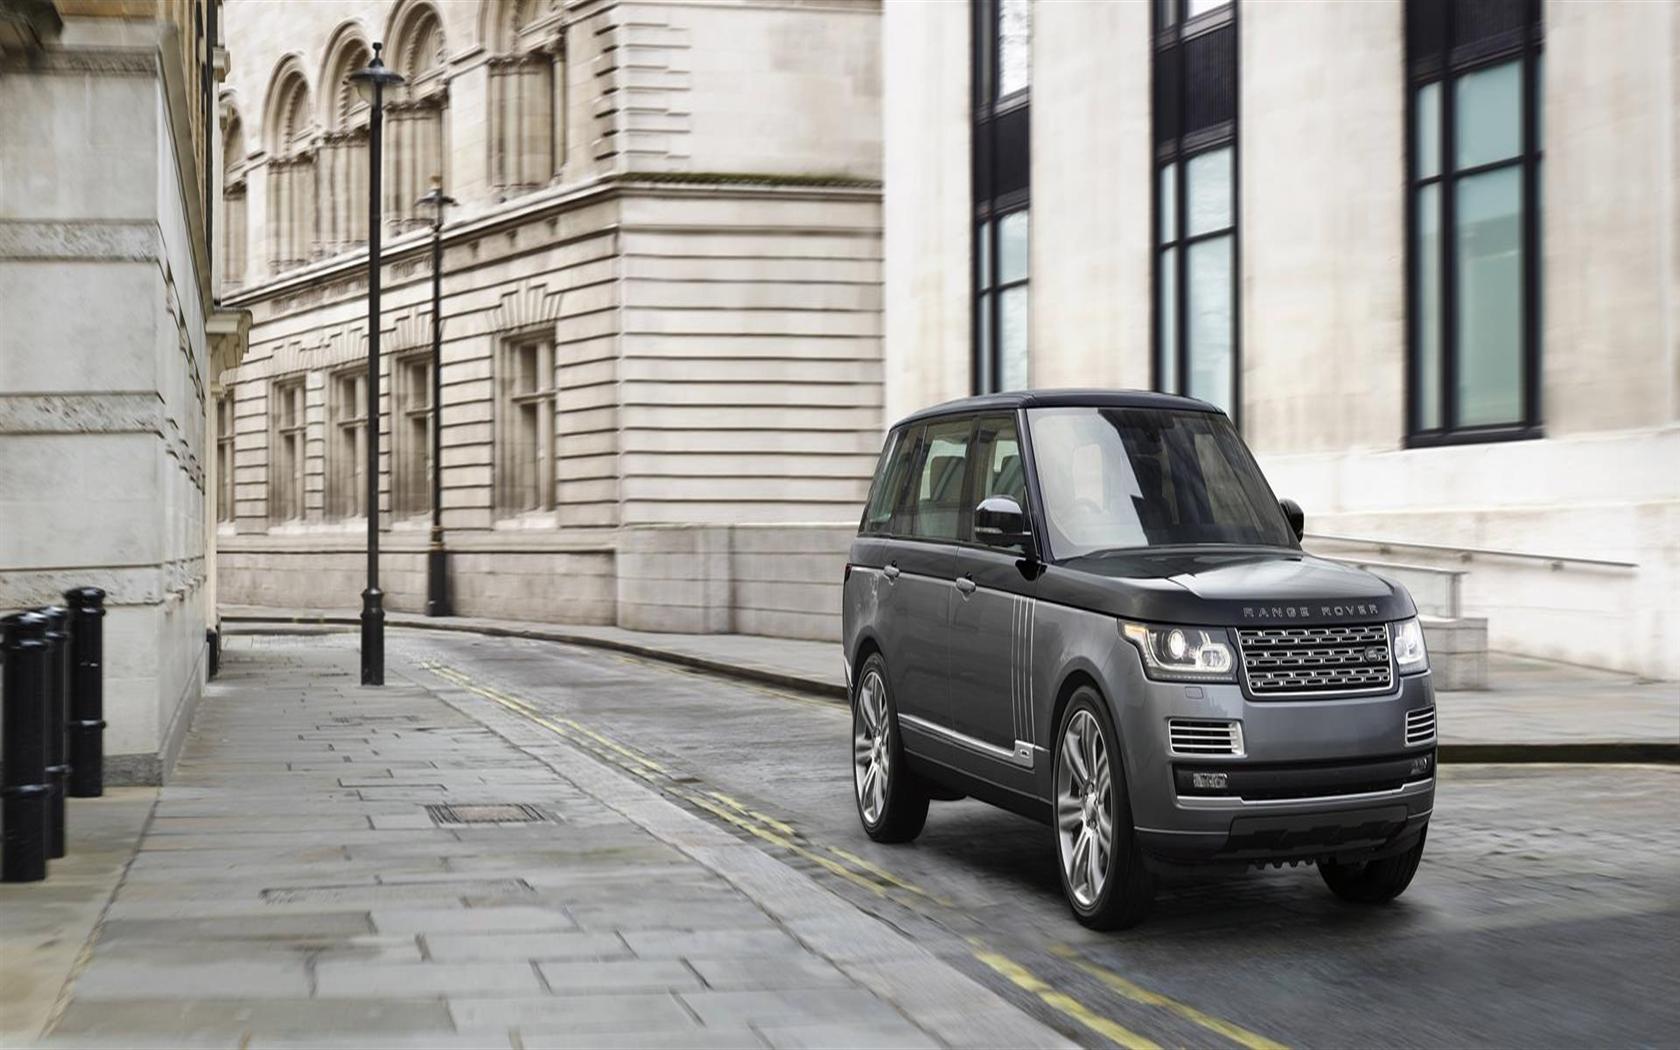 2015 Land Rover Range Rover SVAutobiography